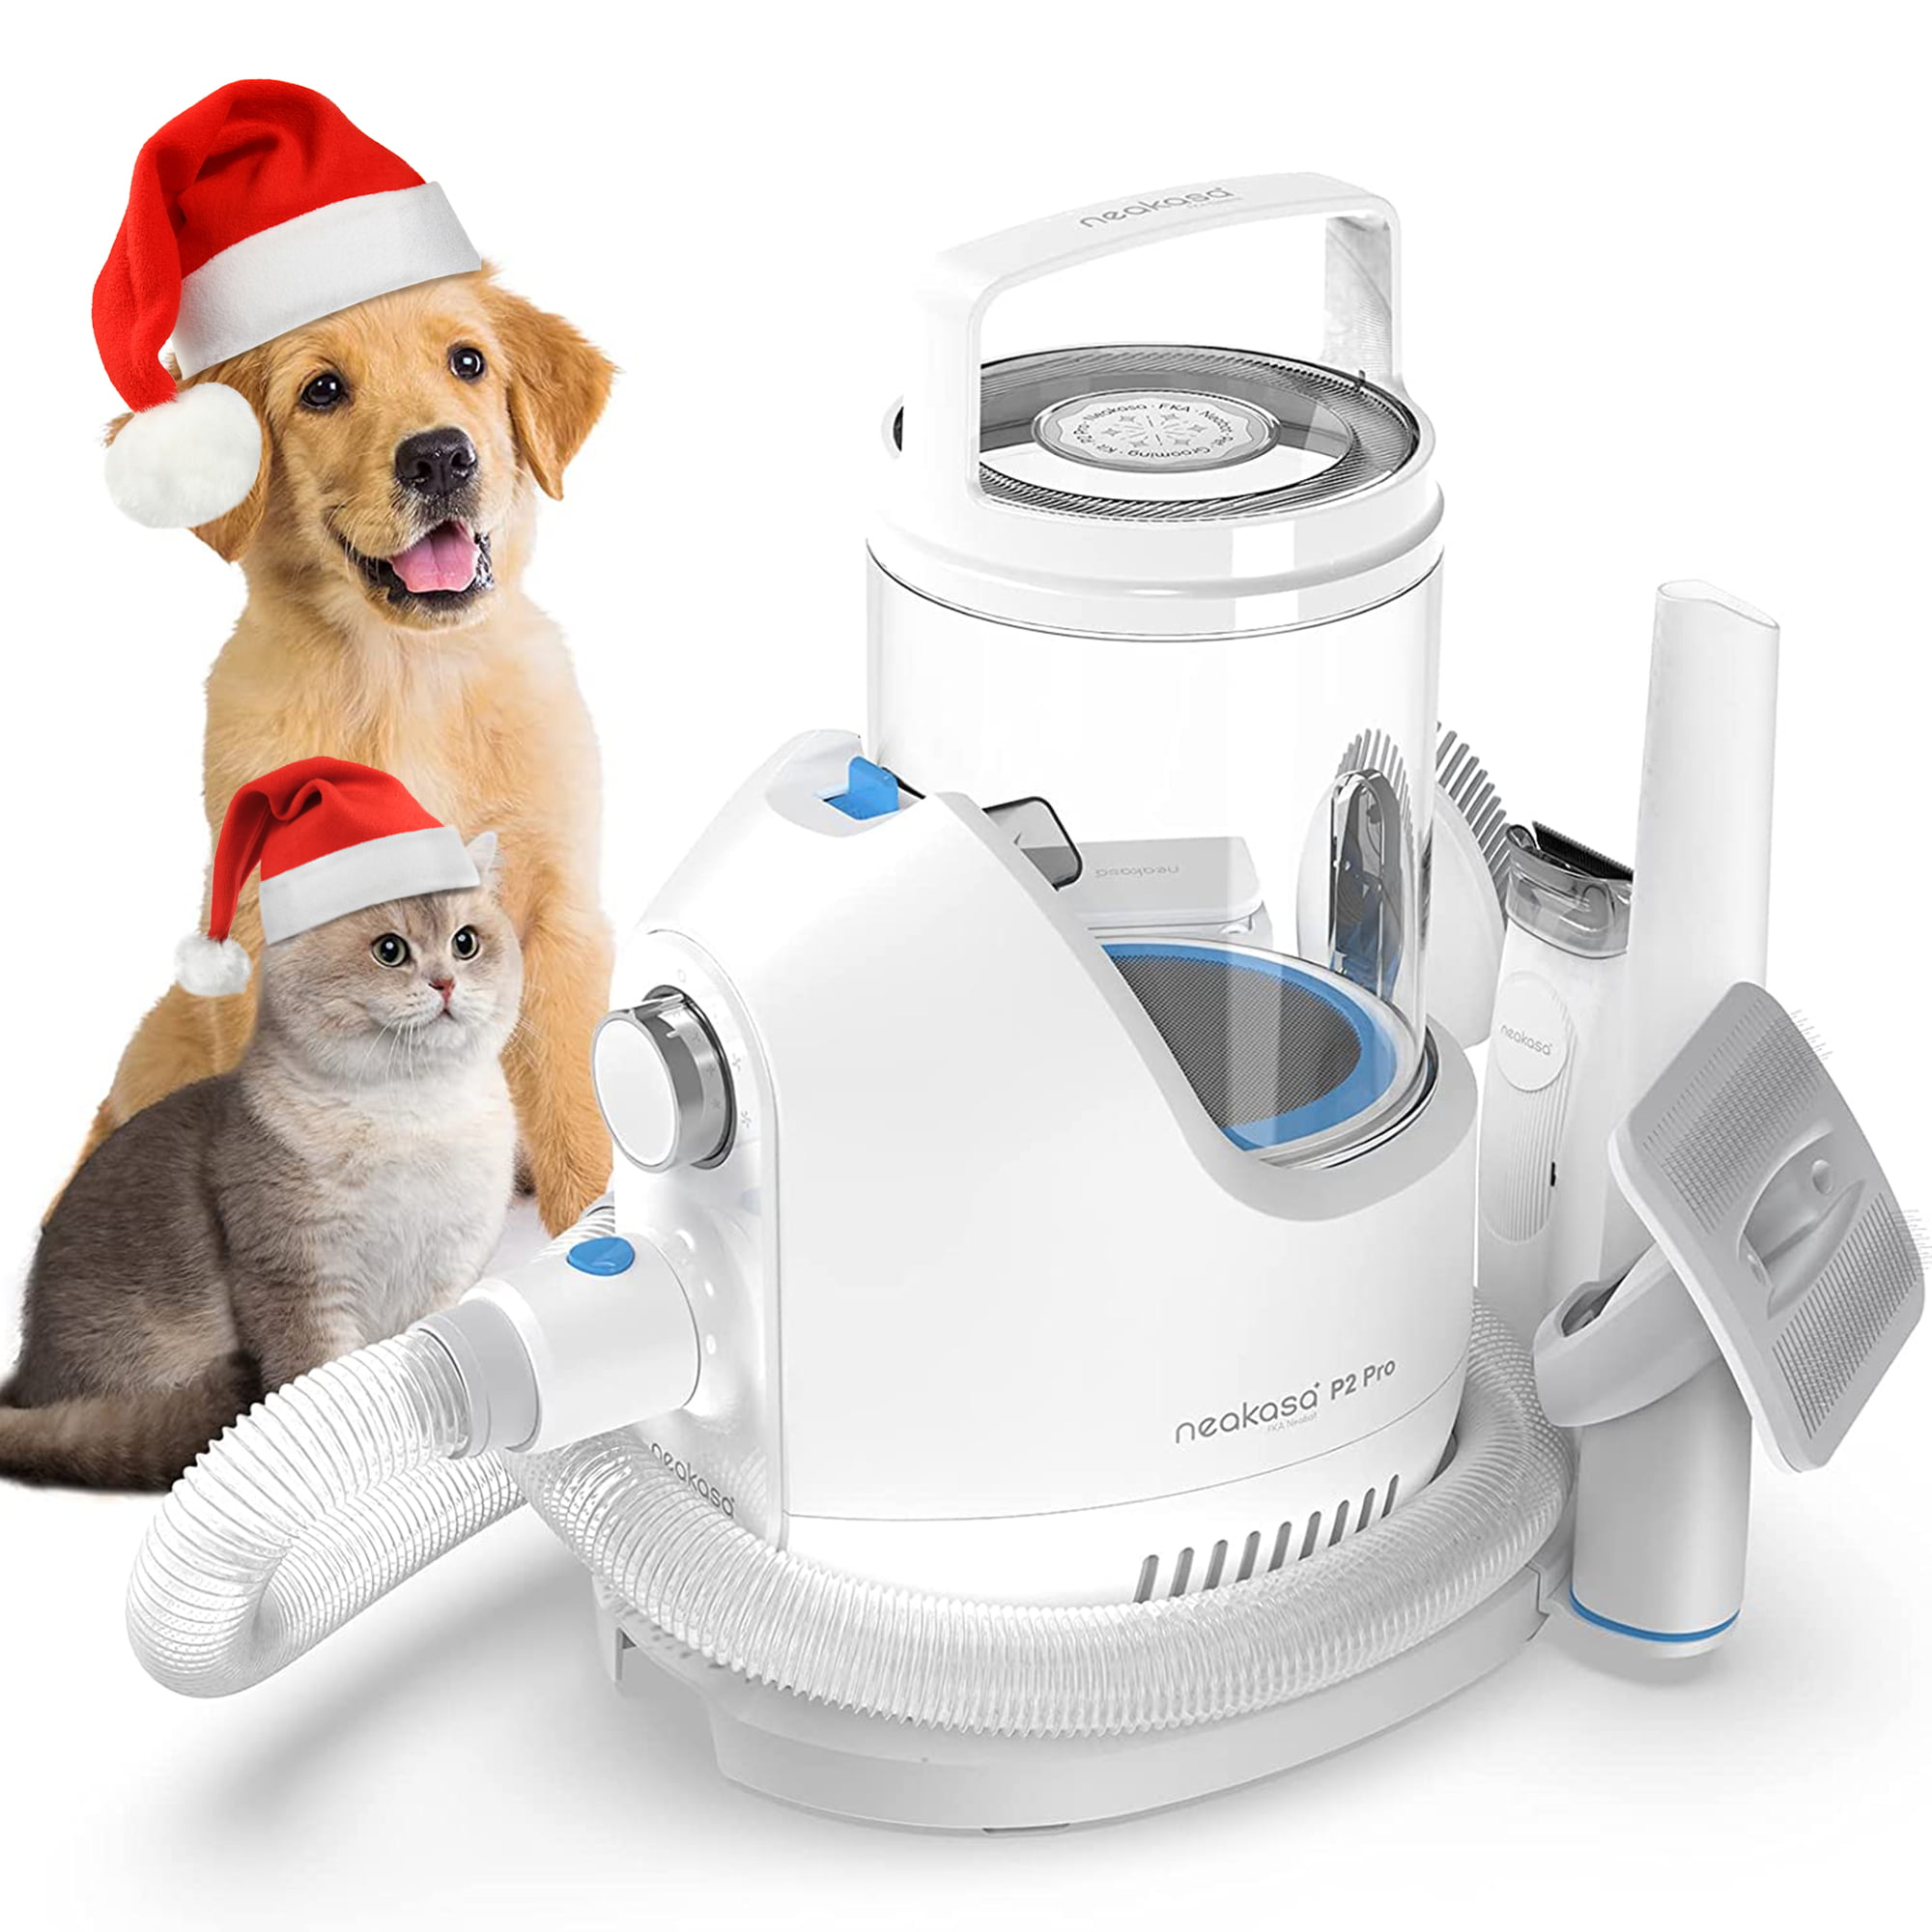 Neakasa P2 Pro 10.5KPa Pet Vacuum Suction Dog Grooming Kit with 5 Pet Grooming Tools with Storage Dock